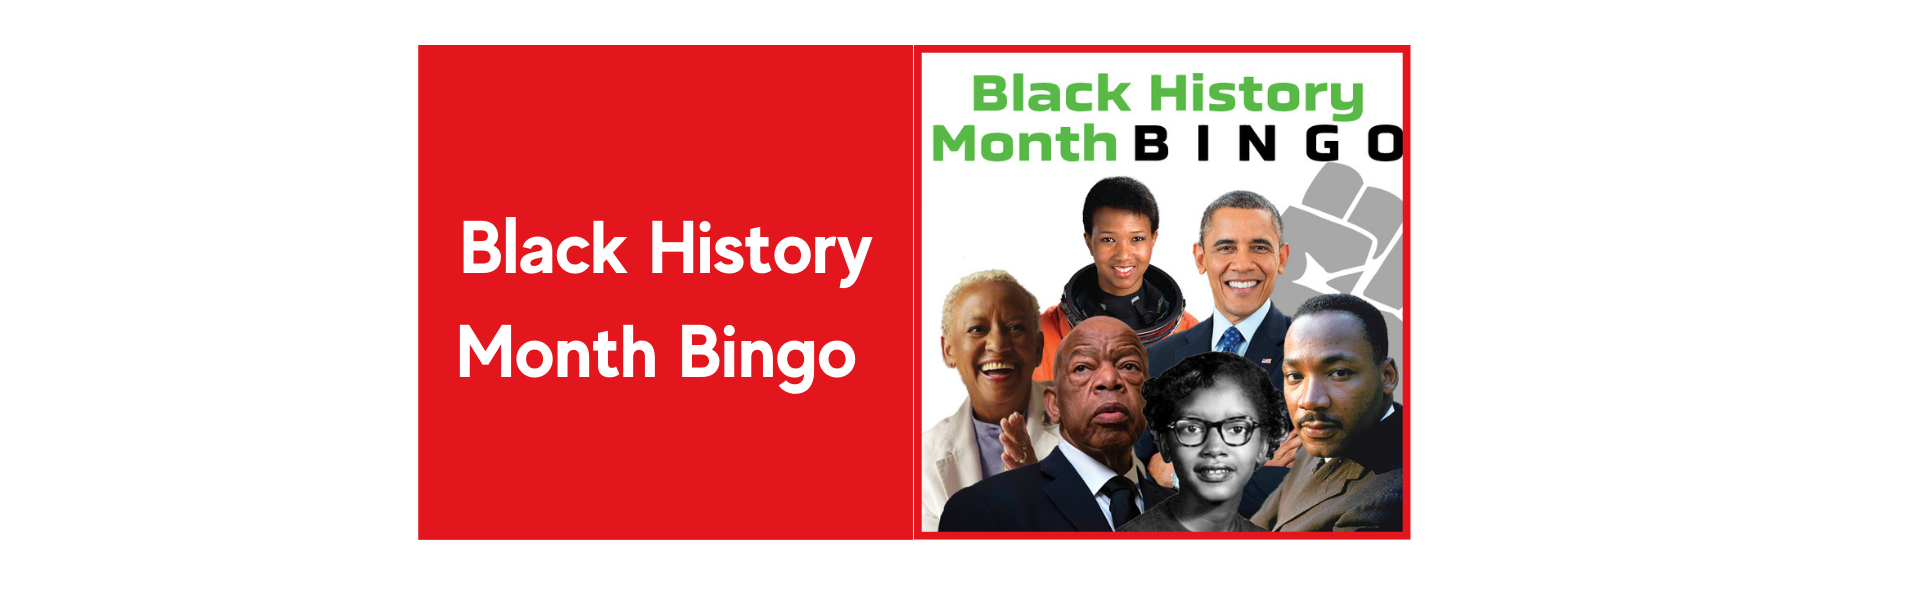 Black-History-Month-Bingo.png